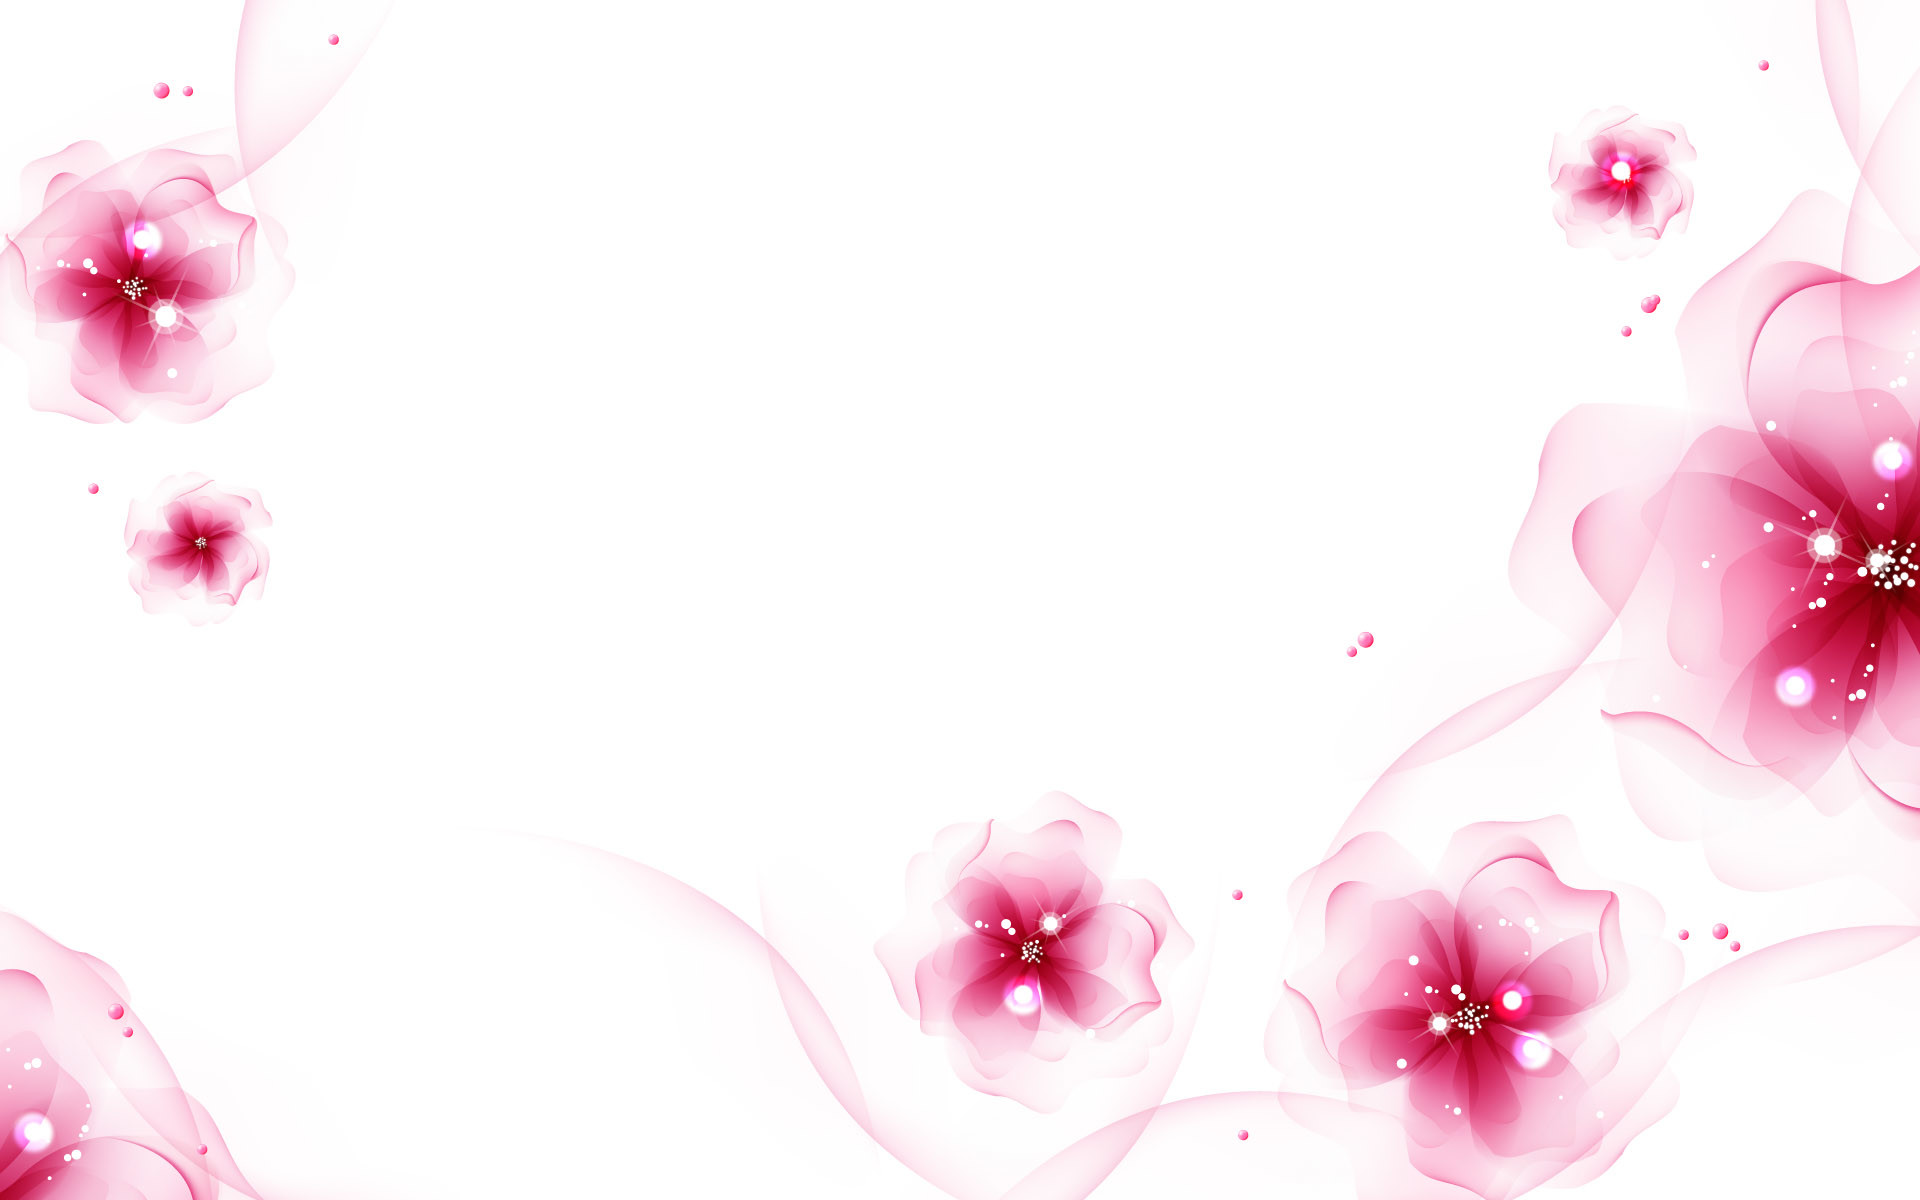 Background Flower wallpaper – 253766